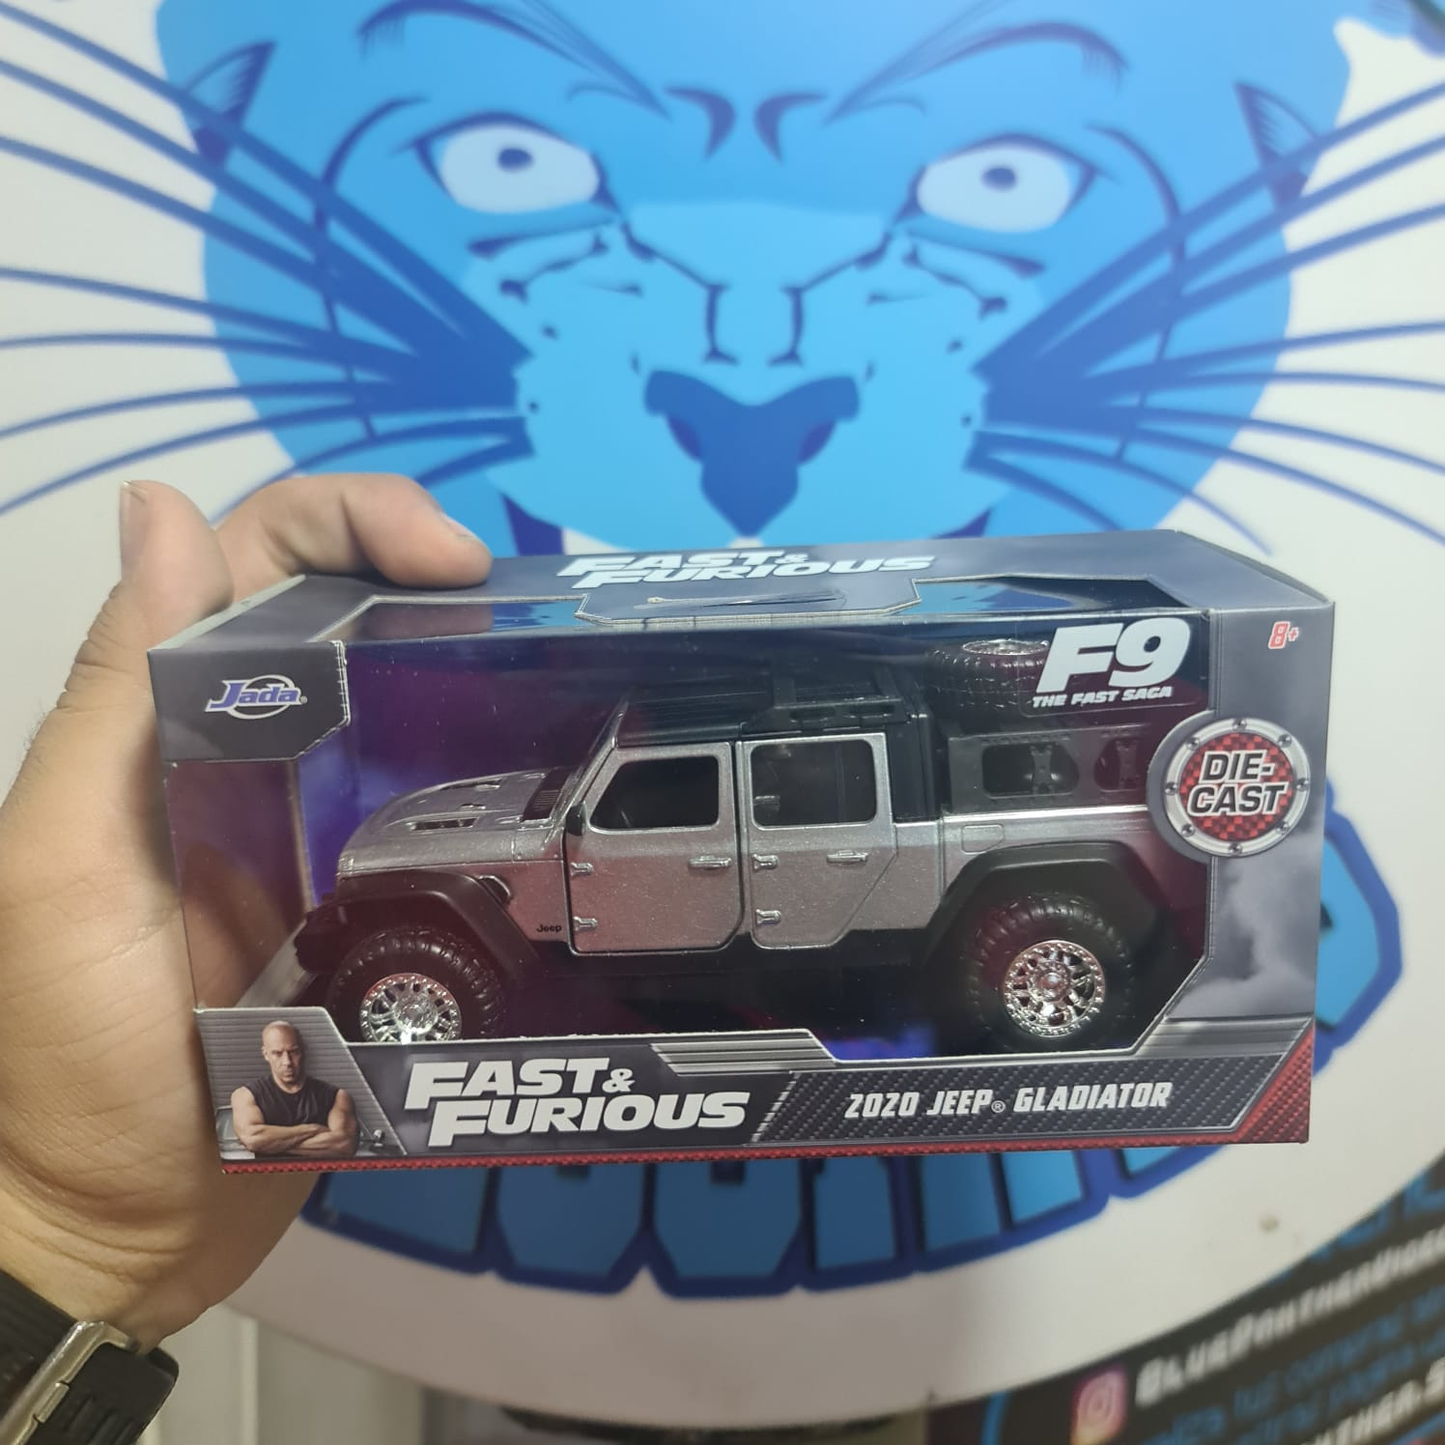 1-32 jeep gladiator Fast and furious Jada toys